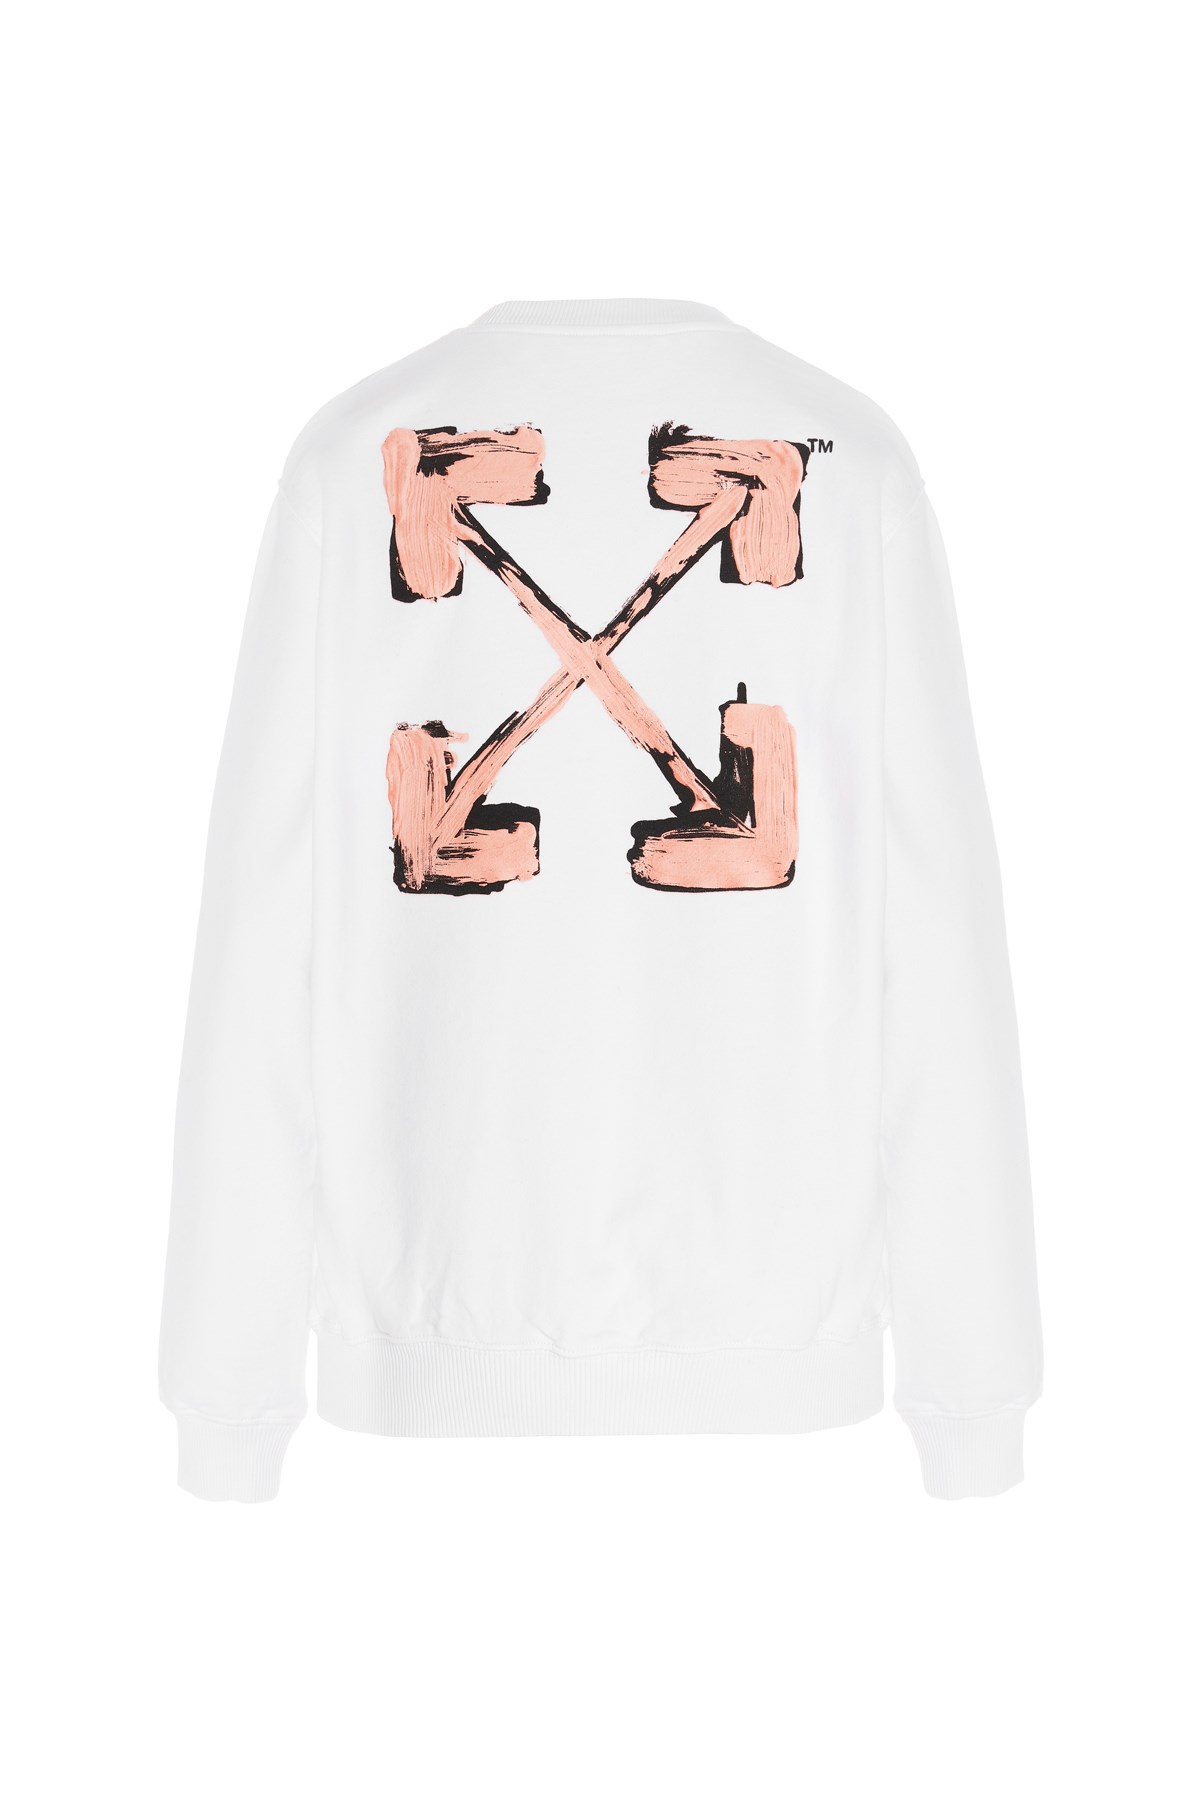 OFF-WHITE 'Painted Arrows’ Sweatshirt